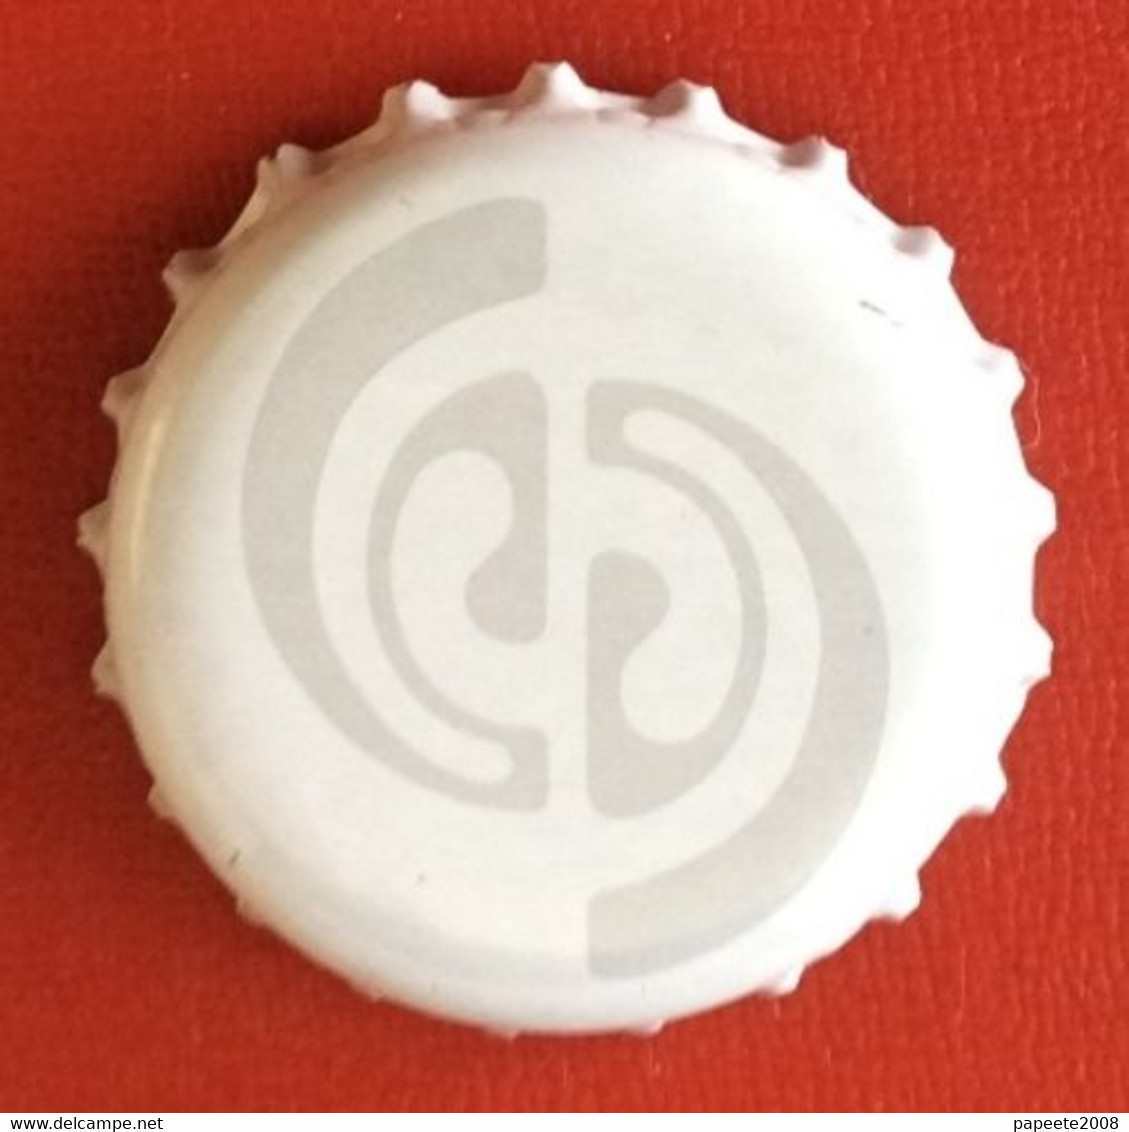 Polynésie Française - Tahiti / Matavai - Capsule De Bière / Depuis Juin 2020 - Beer